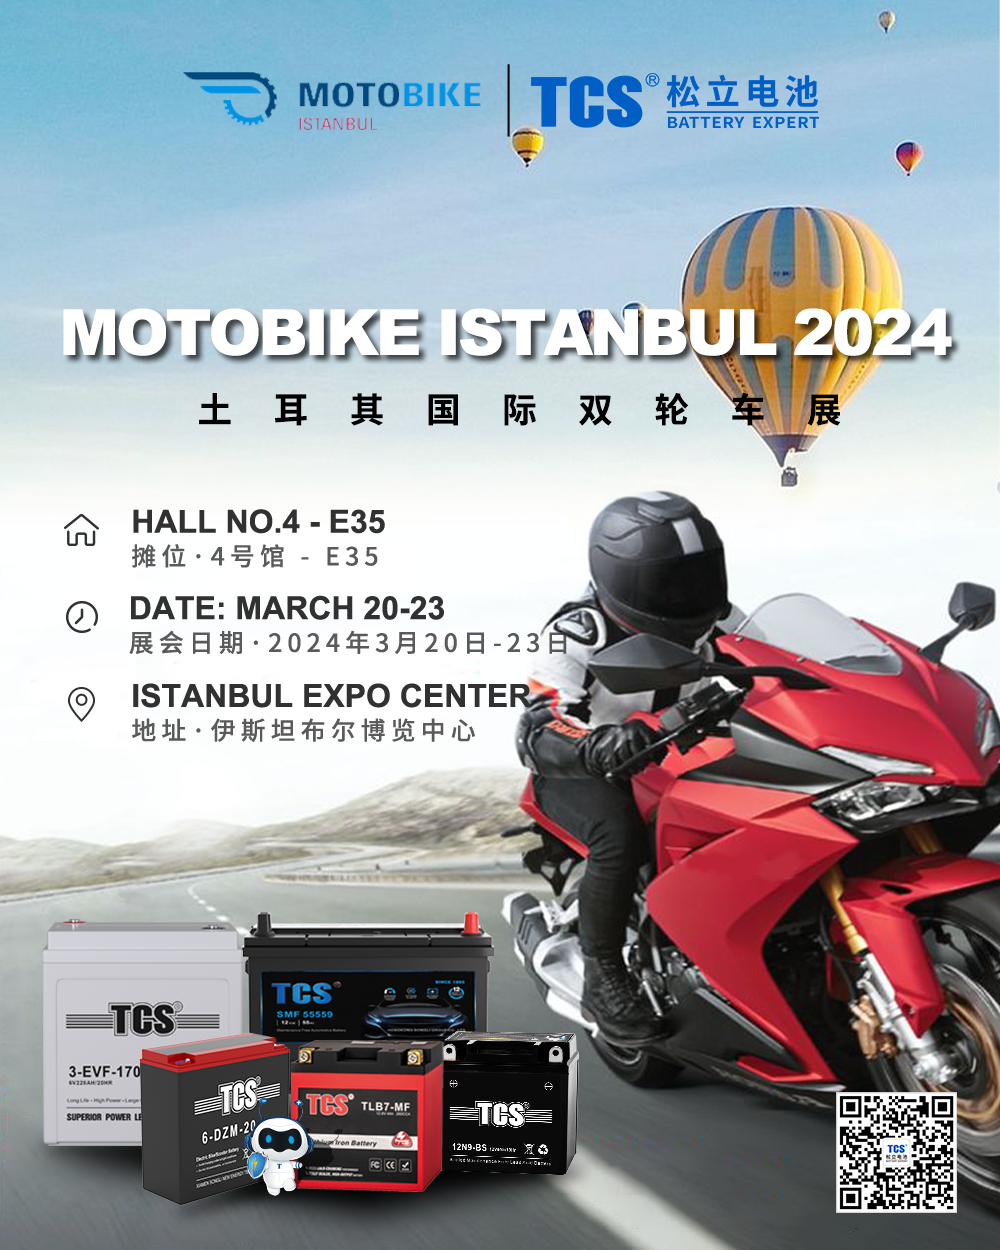 TCS بیٹری موٹر بائیک استنبول 2024